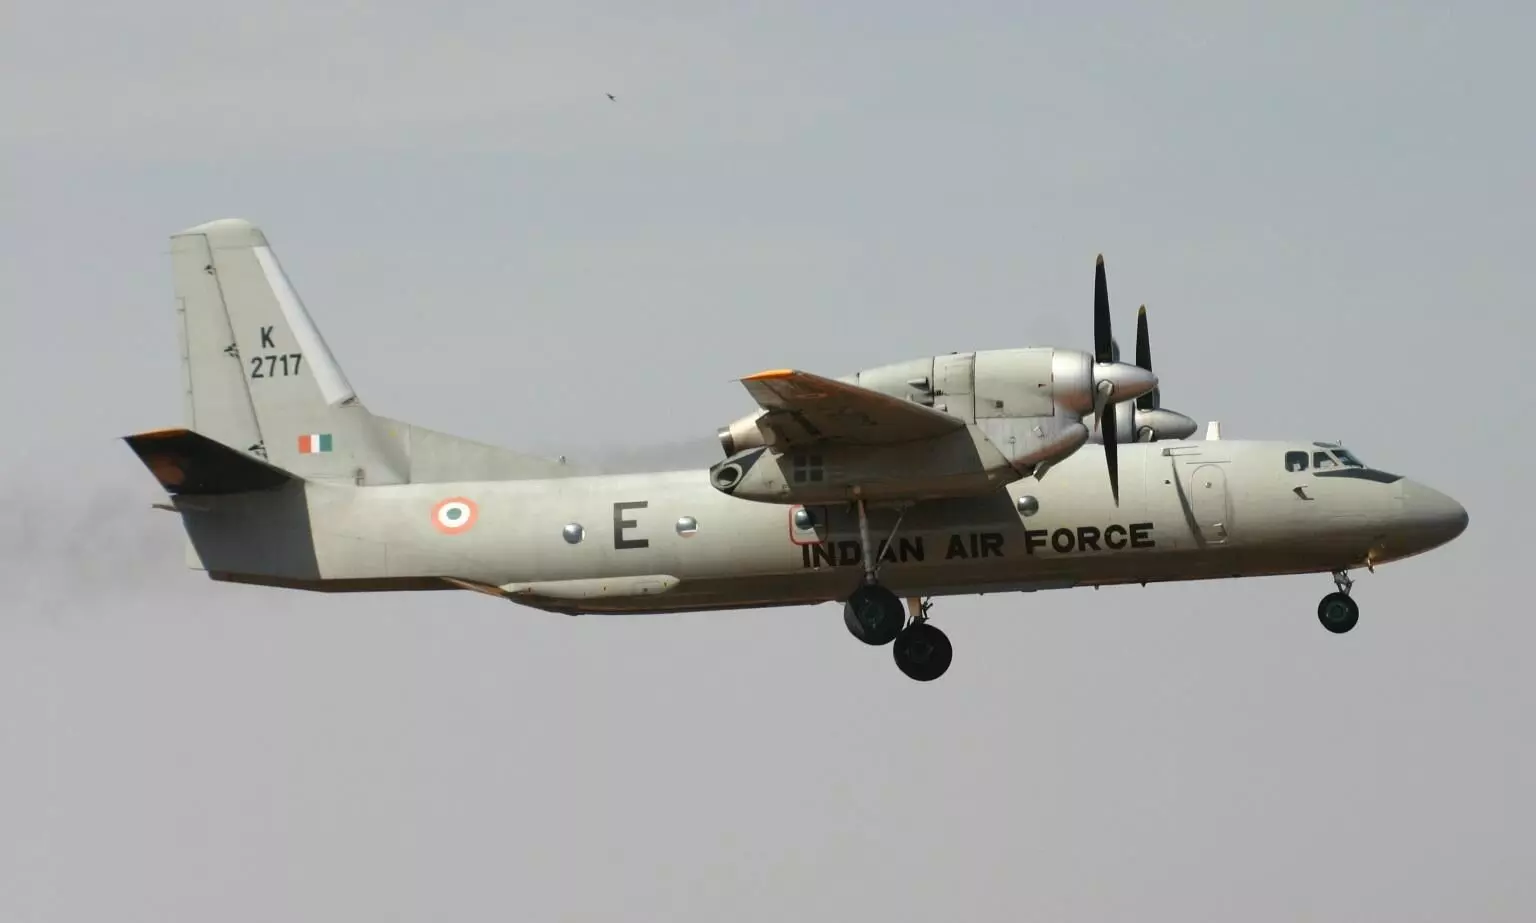 Underwater vehicle recovers IAF flight debris went missing 7 yrs ago